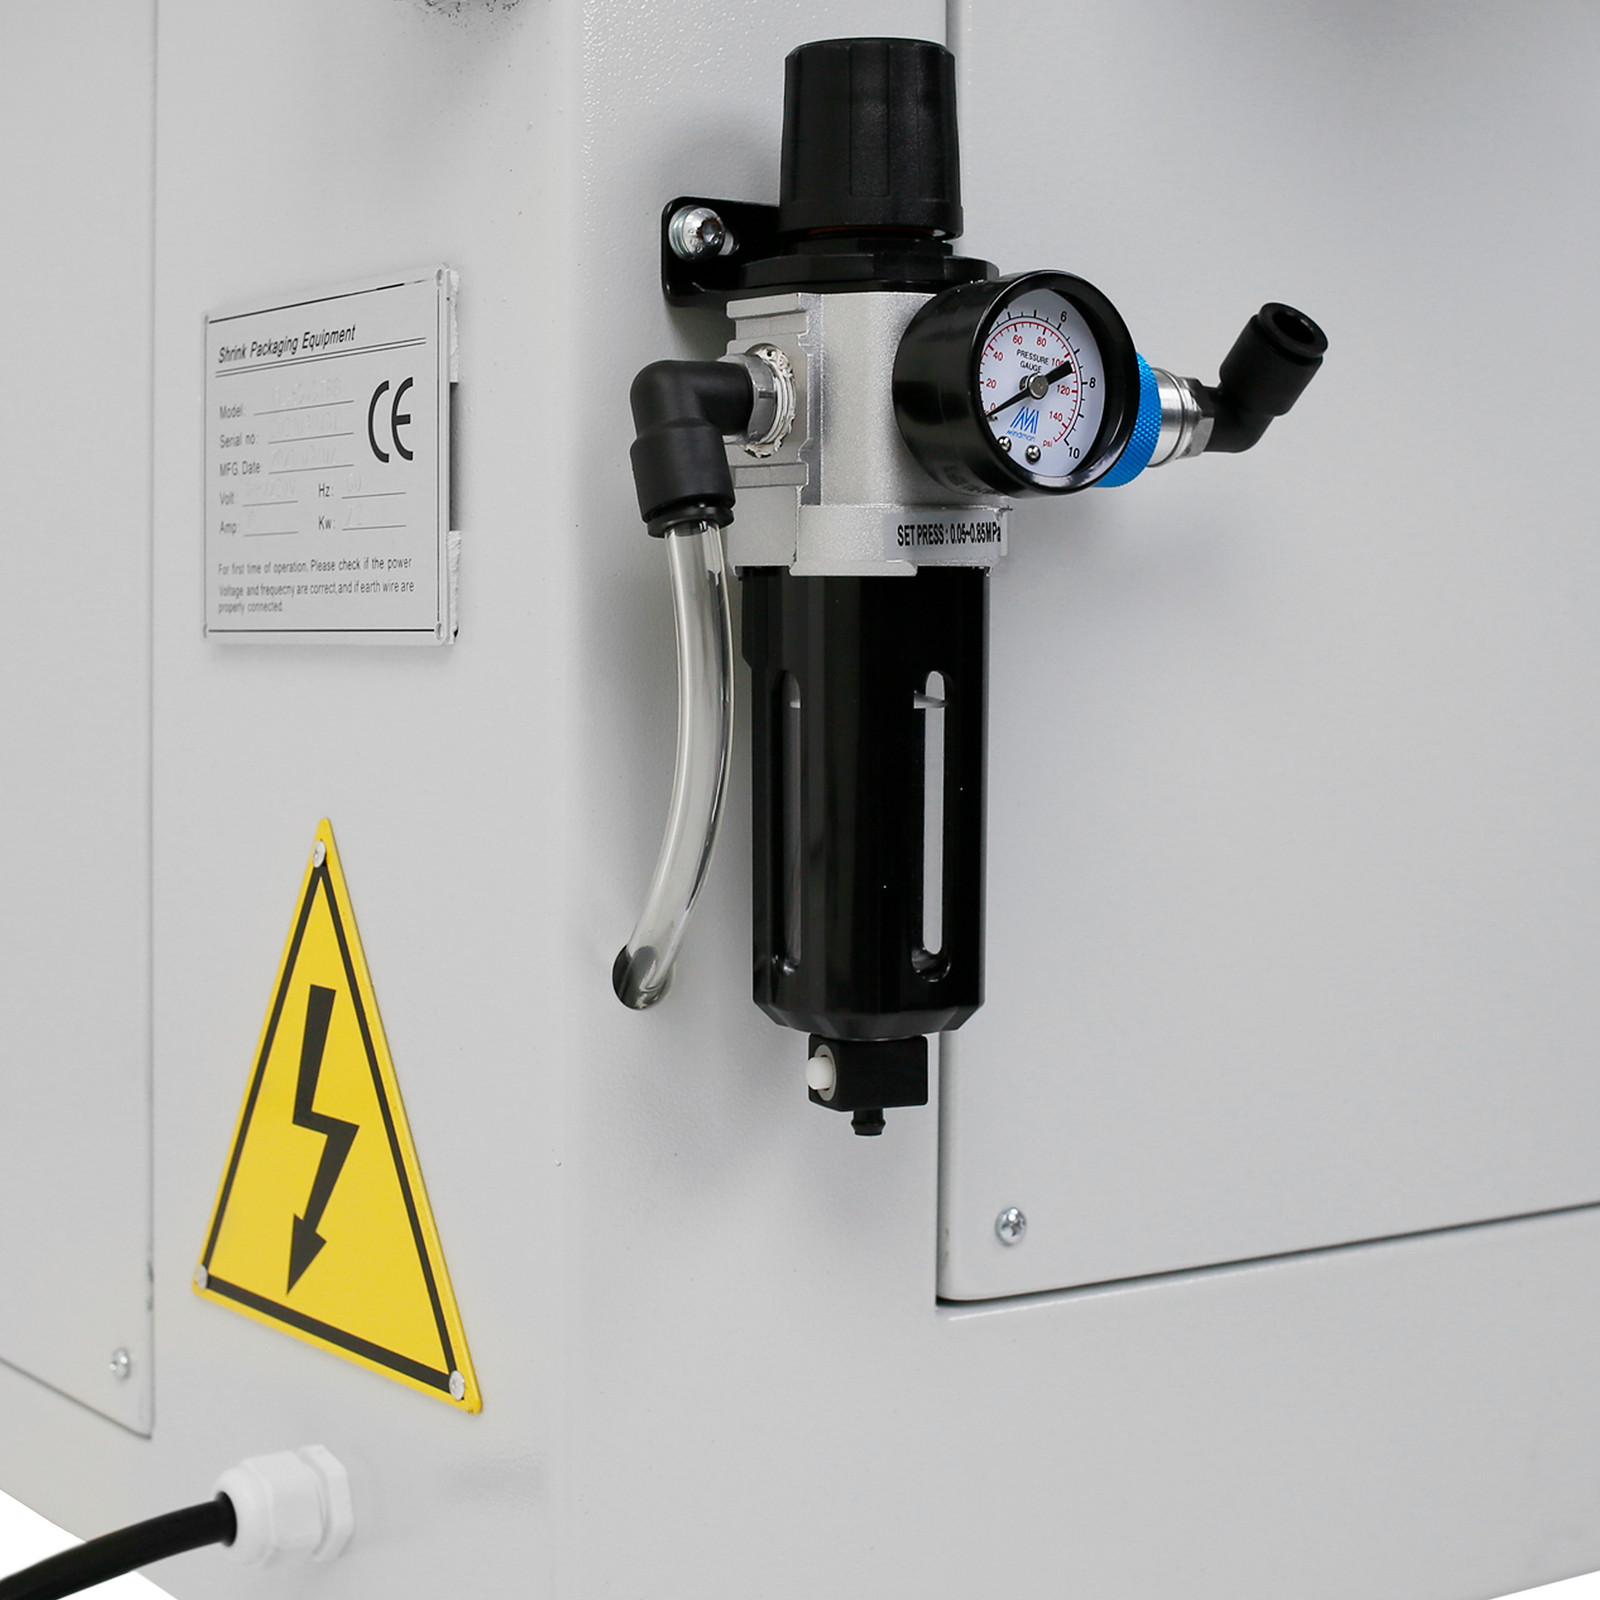 The compresses air regulator of the JORES TECHNOLOGIES® Automatic L Bar Film Sealer